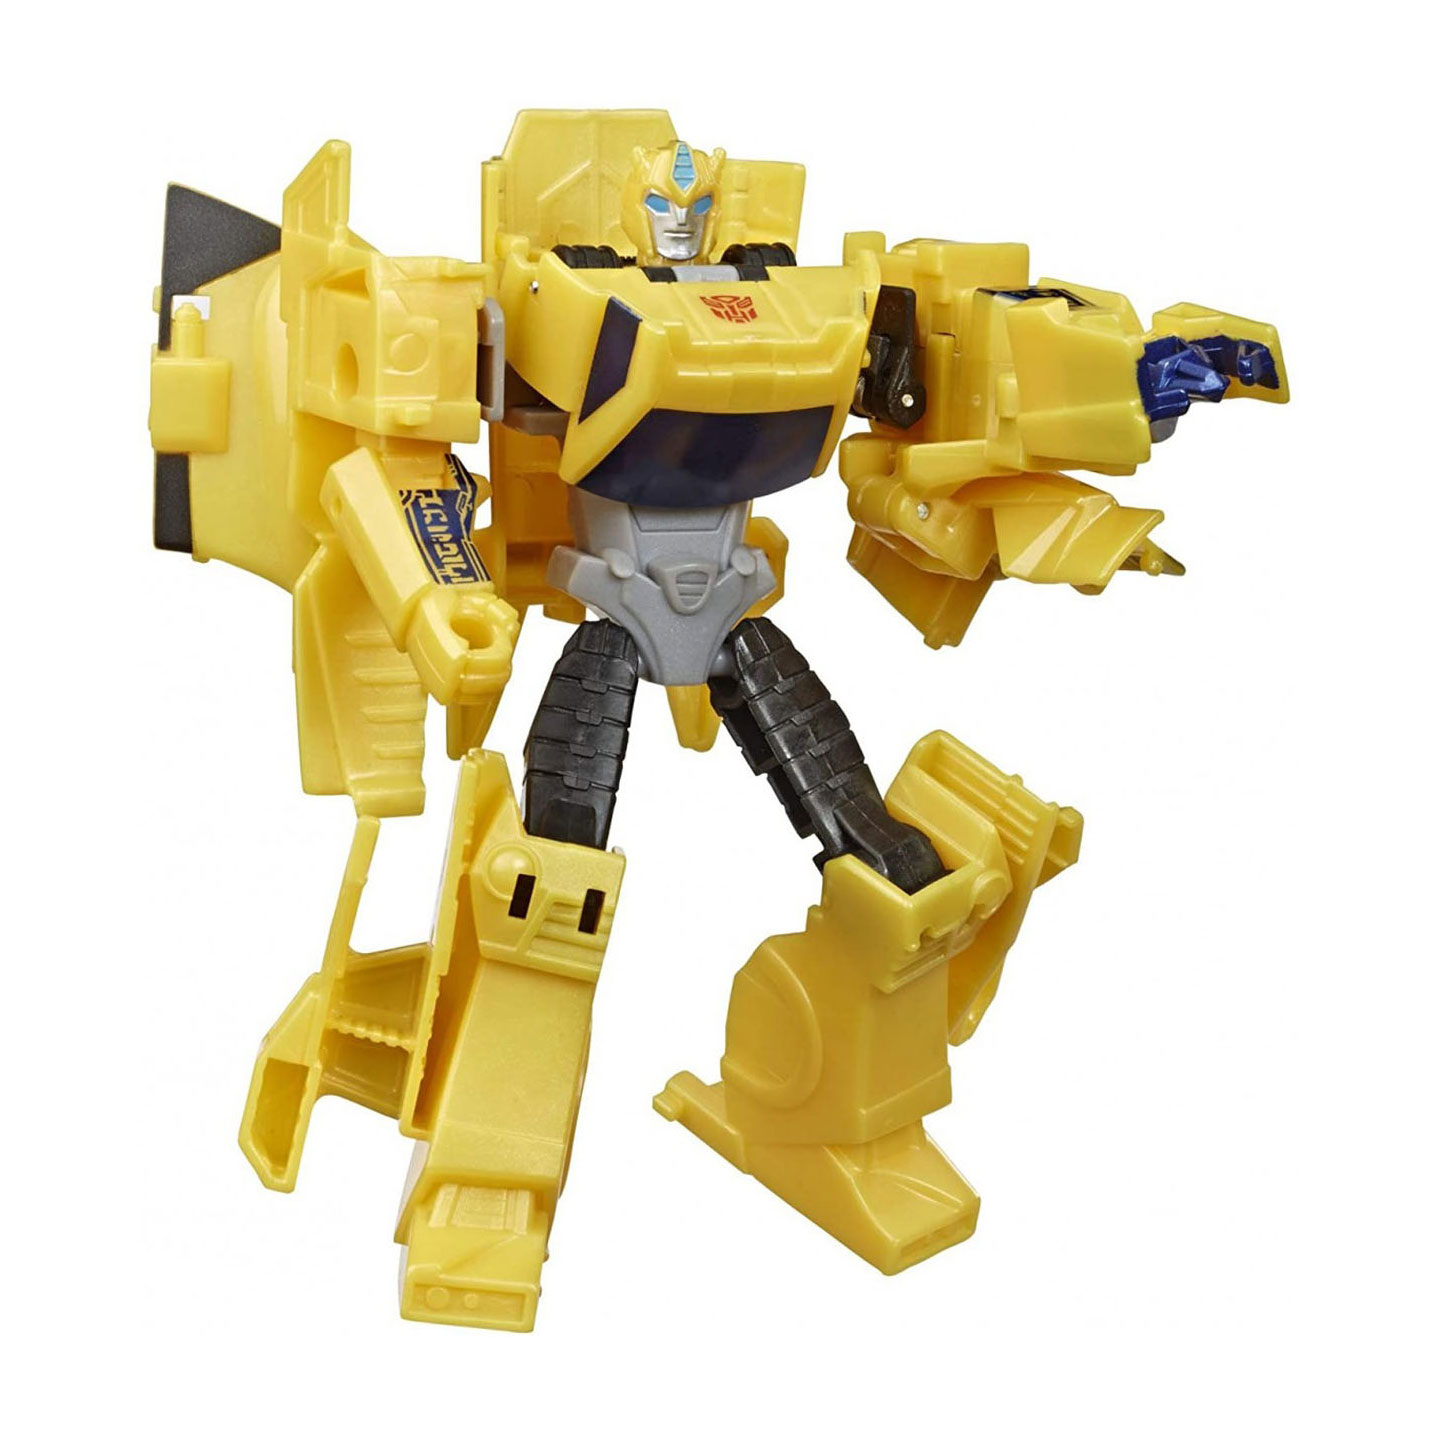 Transformers Cyberverse Warrior - Bumblebee